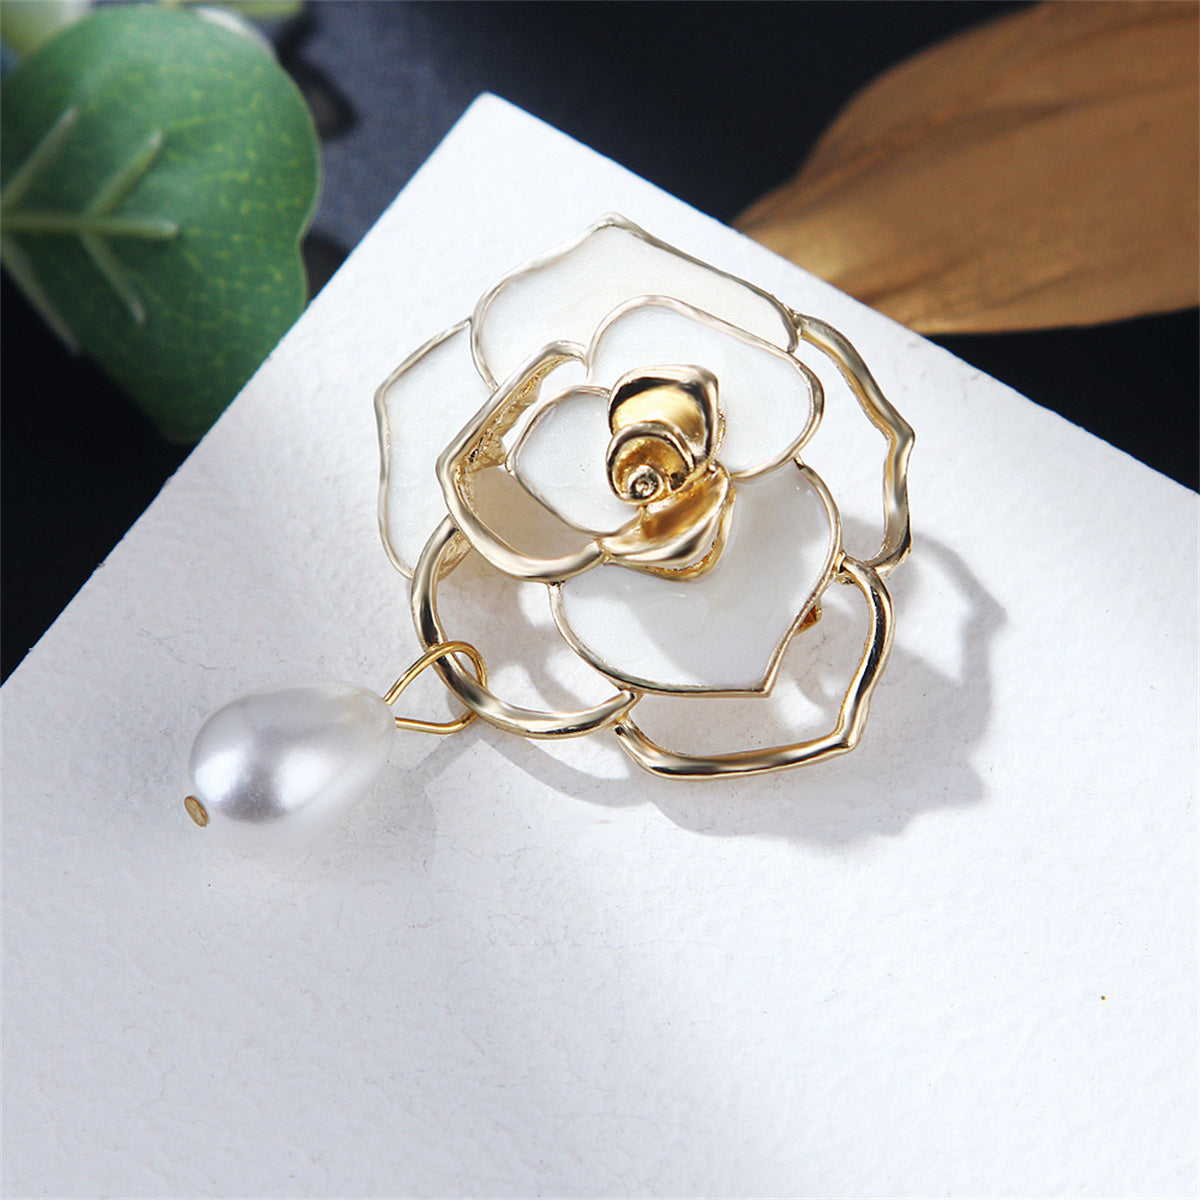 White Enamel & Pearl 18K Gold-Plated Camellia Flower Brooch